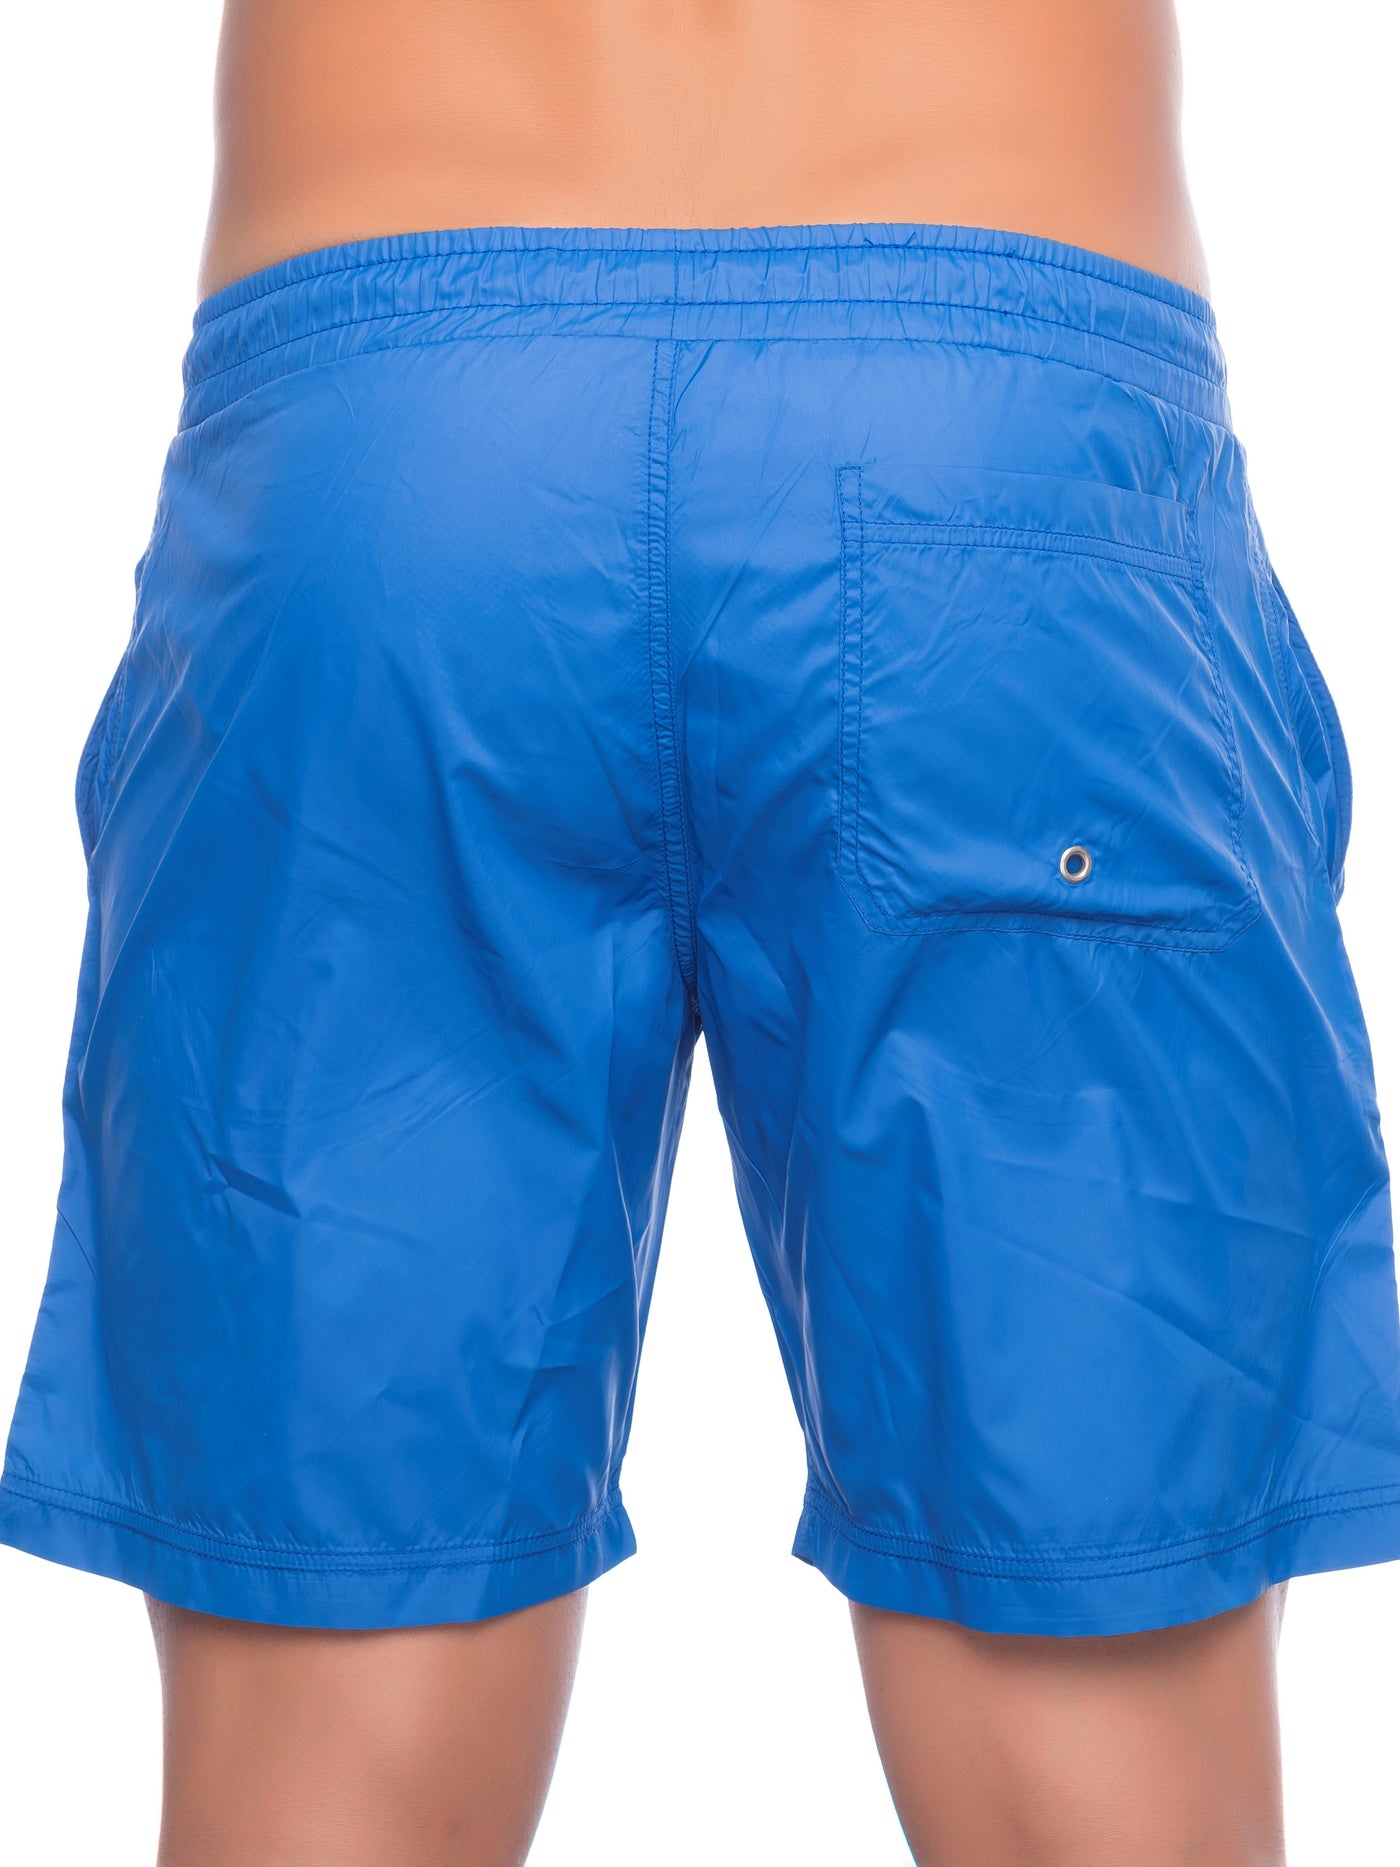 NIT Oscar Bermuda Shorts Men's Paddleboarding Beach Shorts Royal Blue - Activemen Clothing